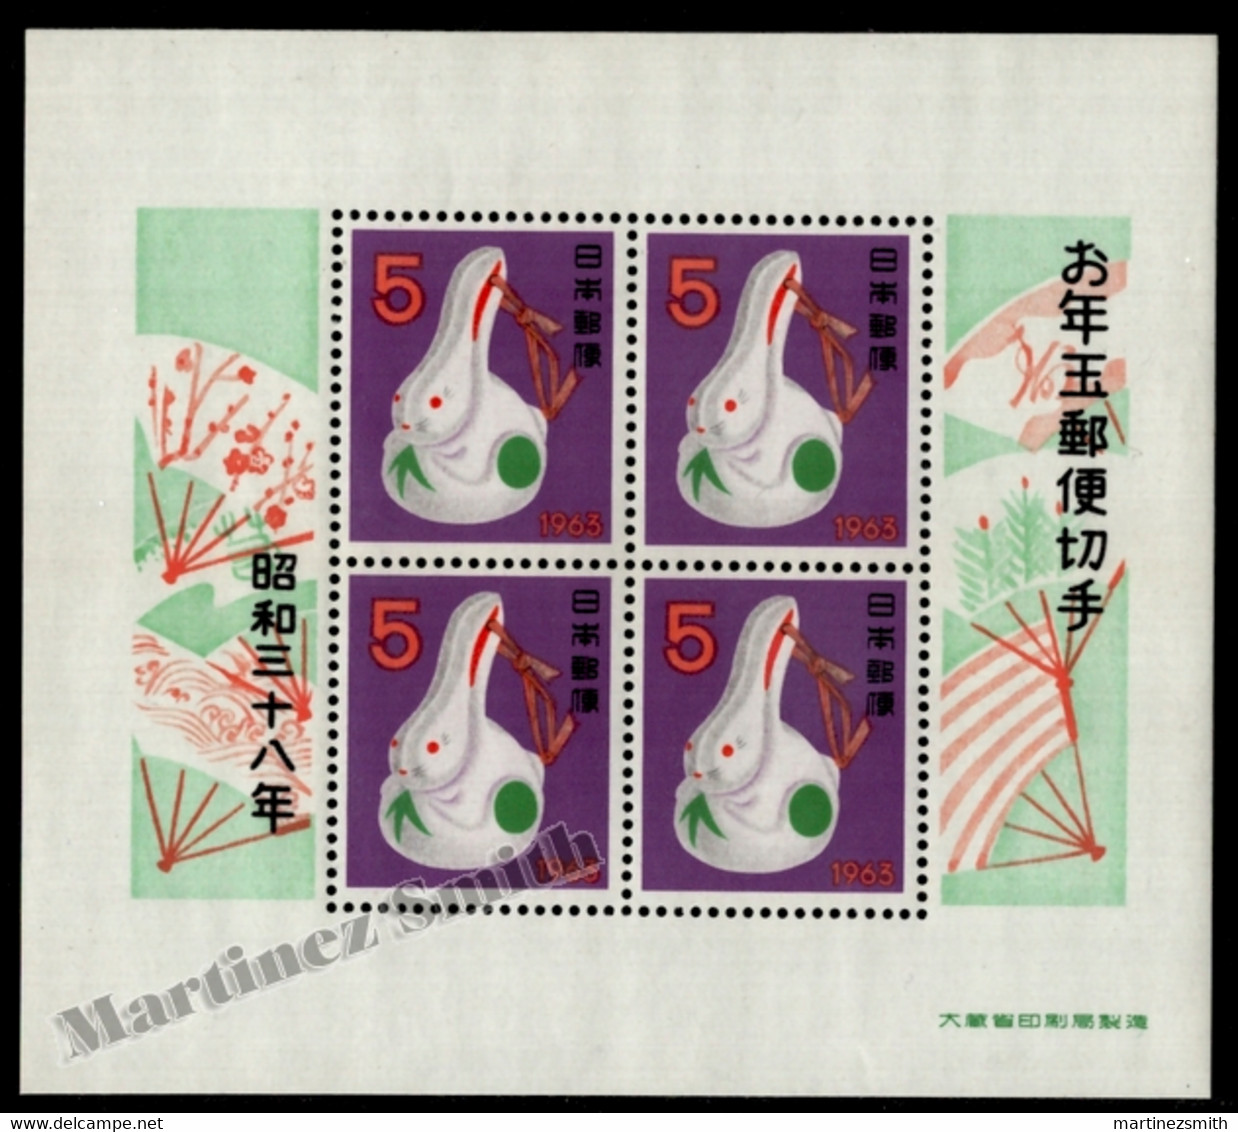 Japon - Japan 1962 Yvert BF 52, New Year, Lunar Year Of The Rabbit - Miniature Sheet - MNH - Blocs-feuillets